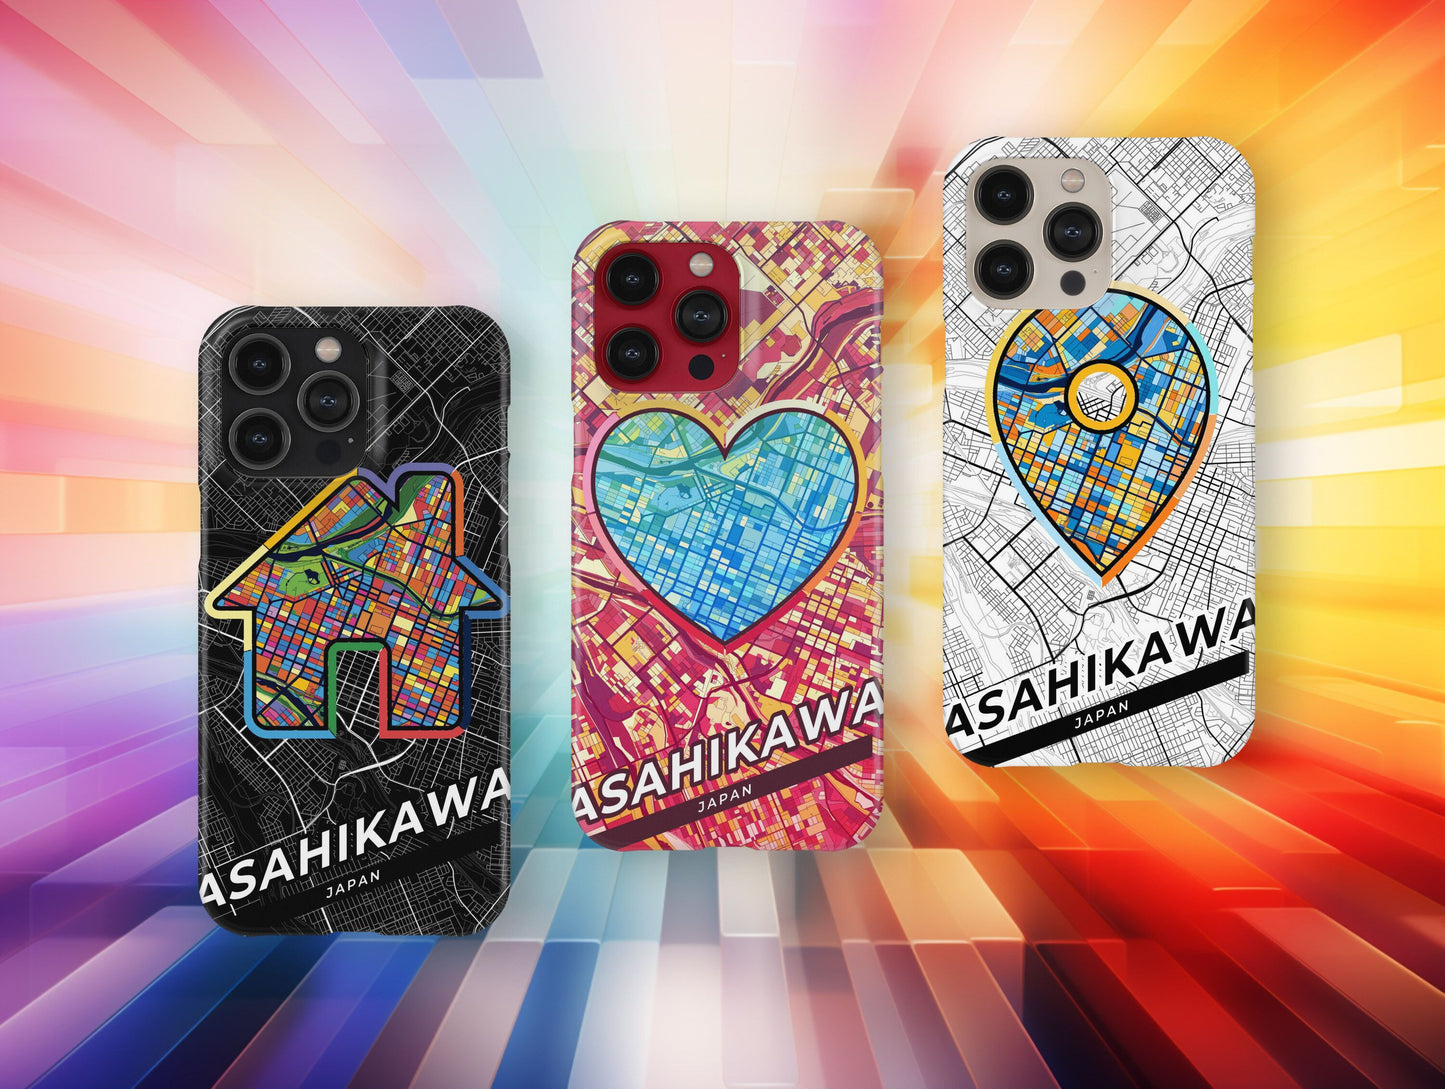 Asahikawa Japan slim phone case with colorful icon. Birthday, wedding or housewarming gift. Couple match cases.